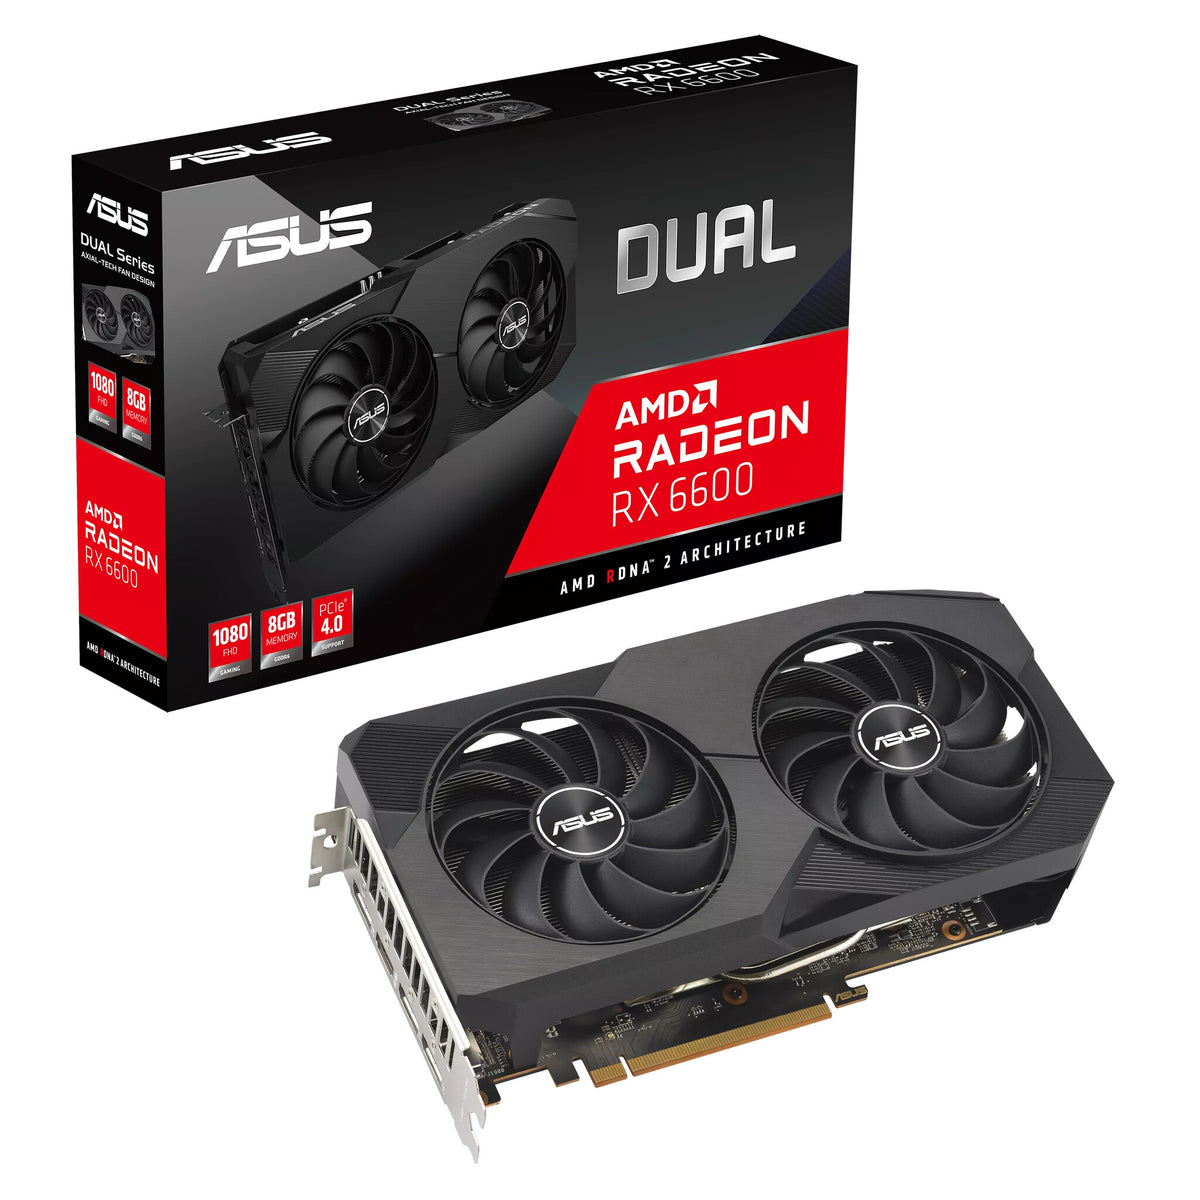 ASUS Dual - AMD 8 GB GDDR6 Radeon RX 6600 graphics card